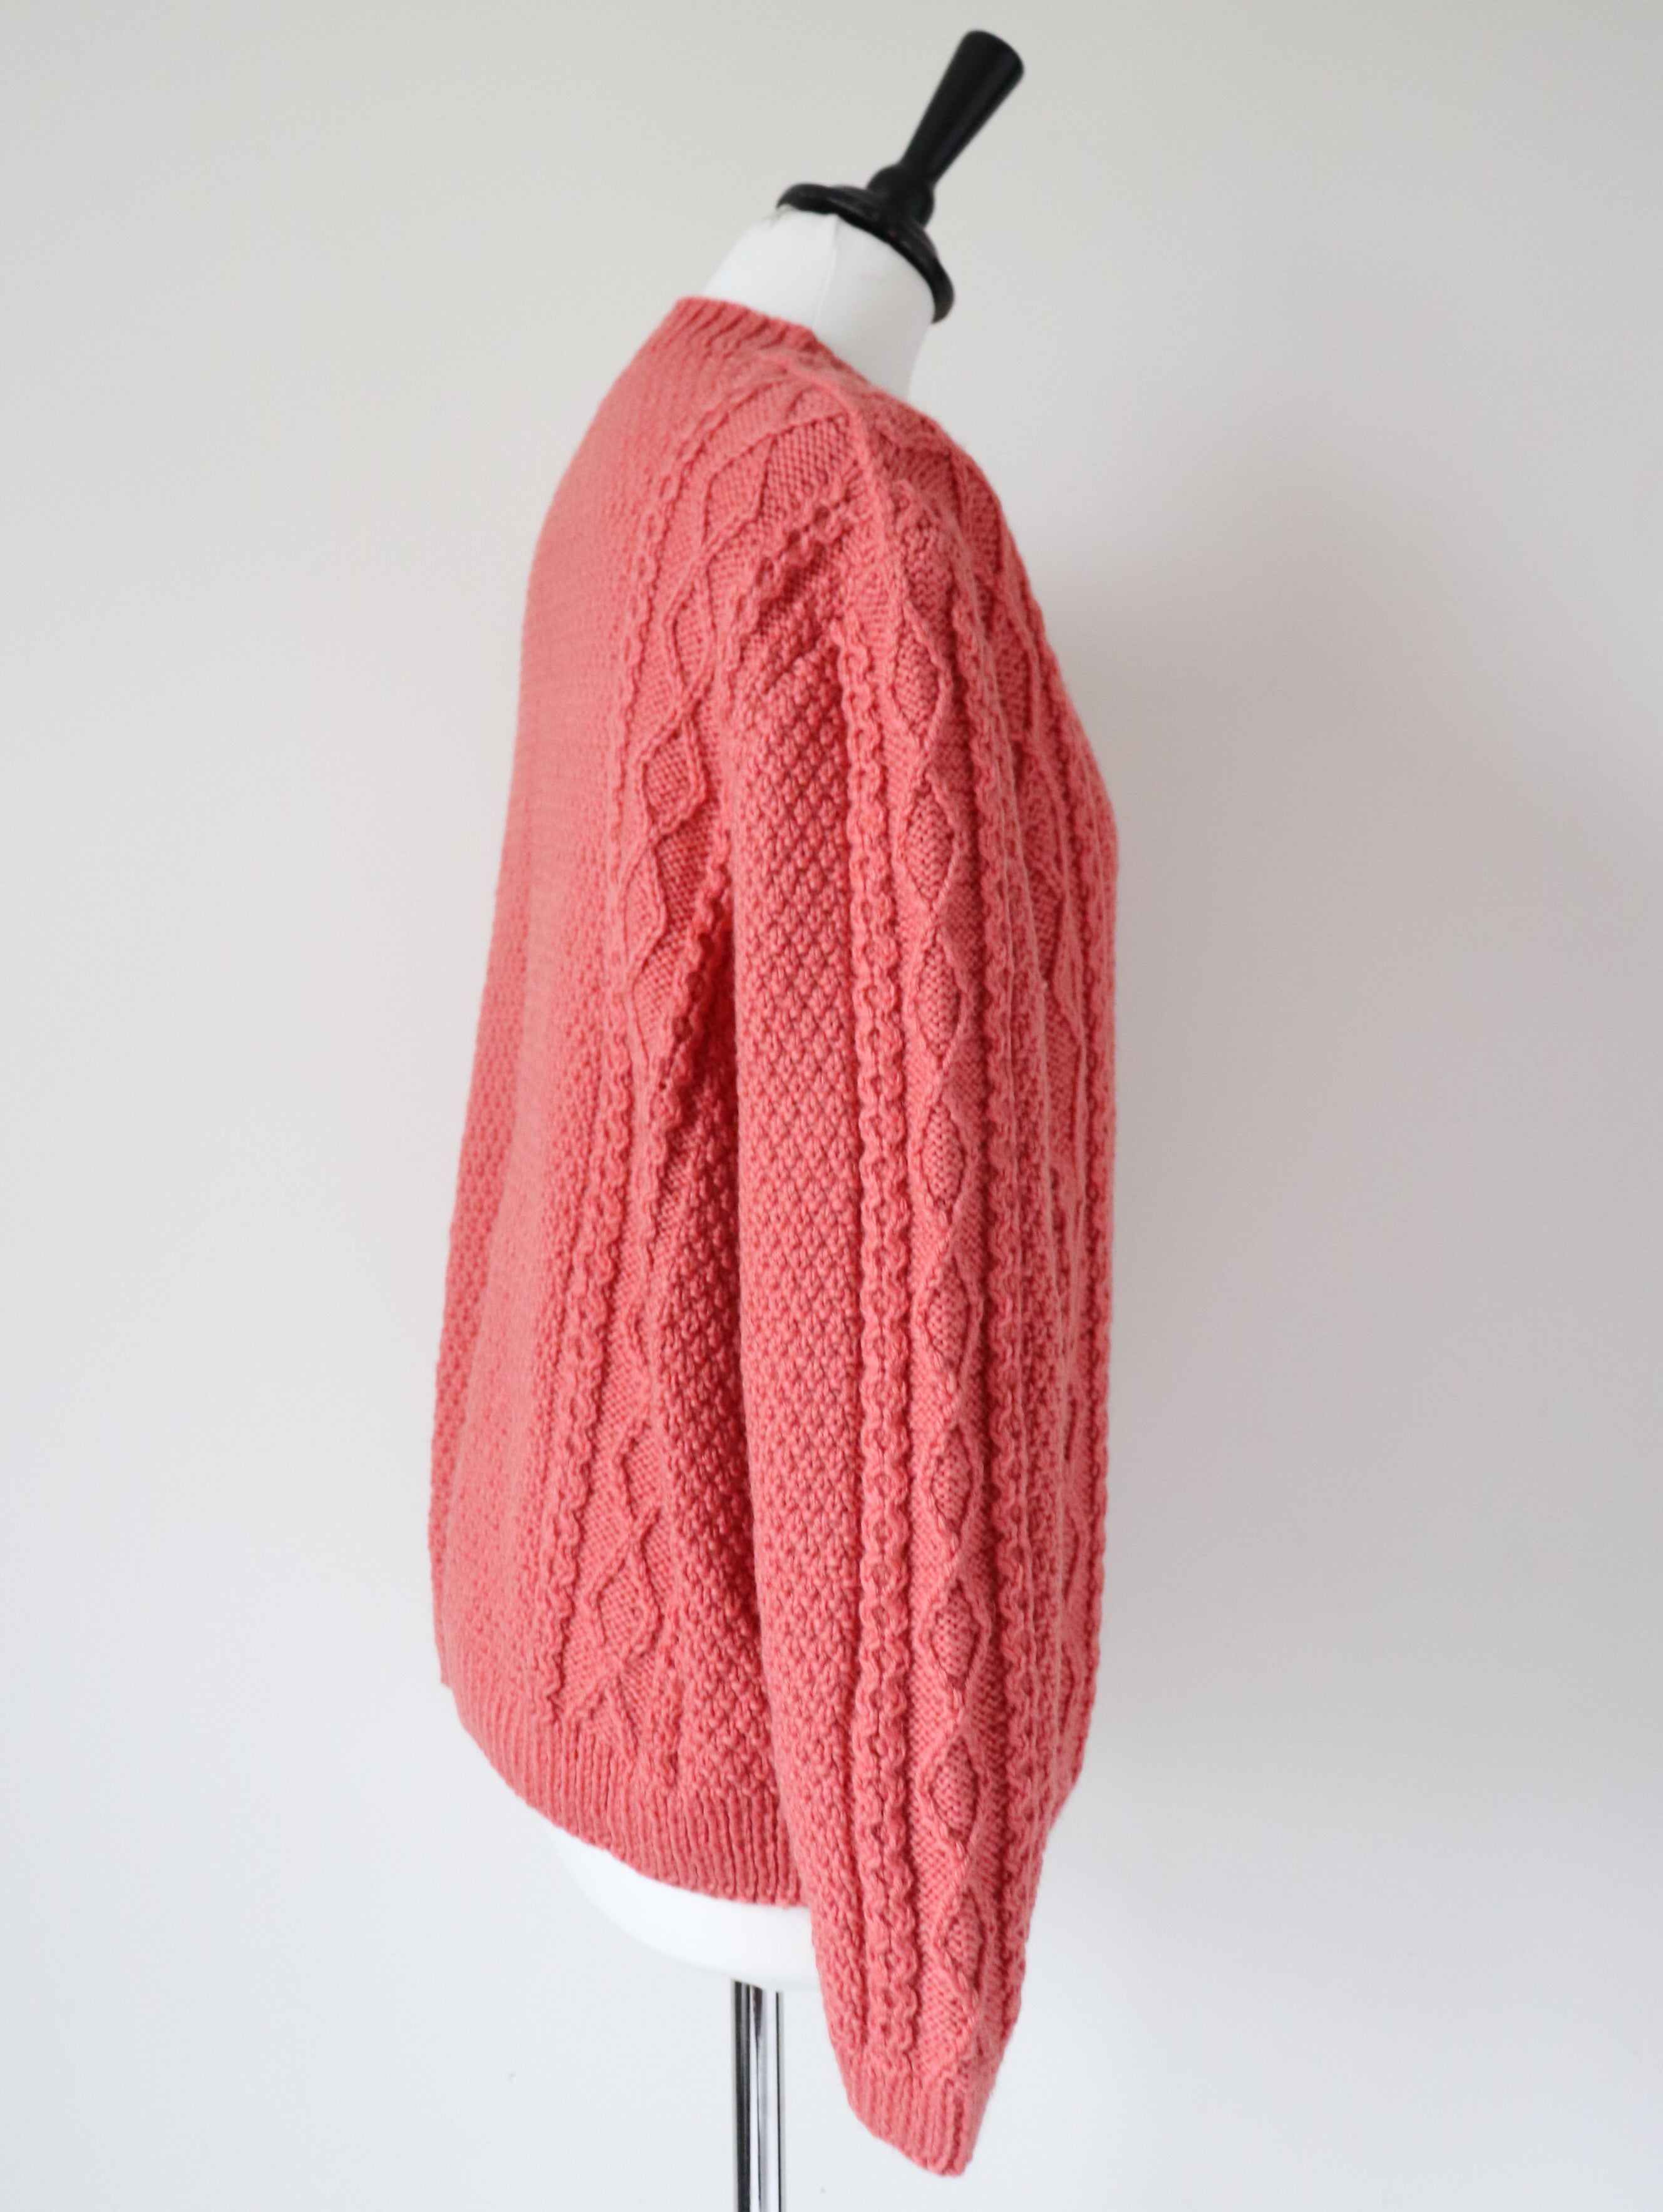 Coral Orange Cable Knit Vintage Cardigan - 1960s - Wool Blend - M / UK 12